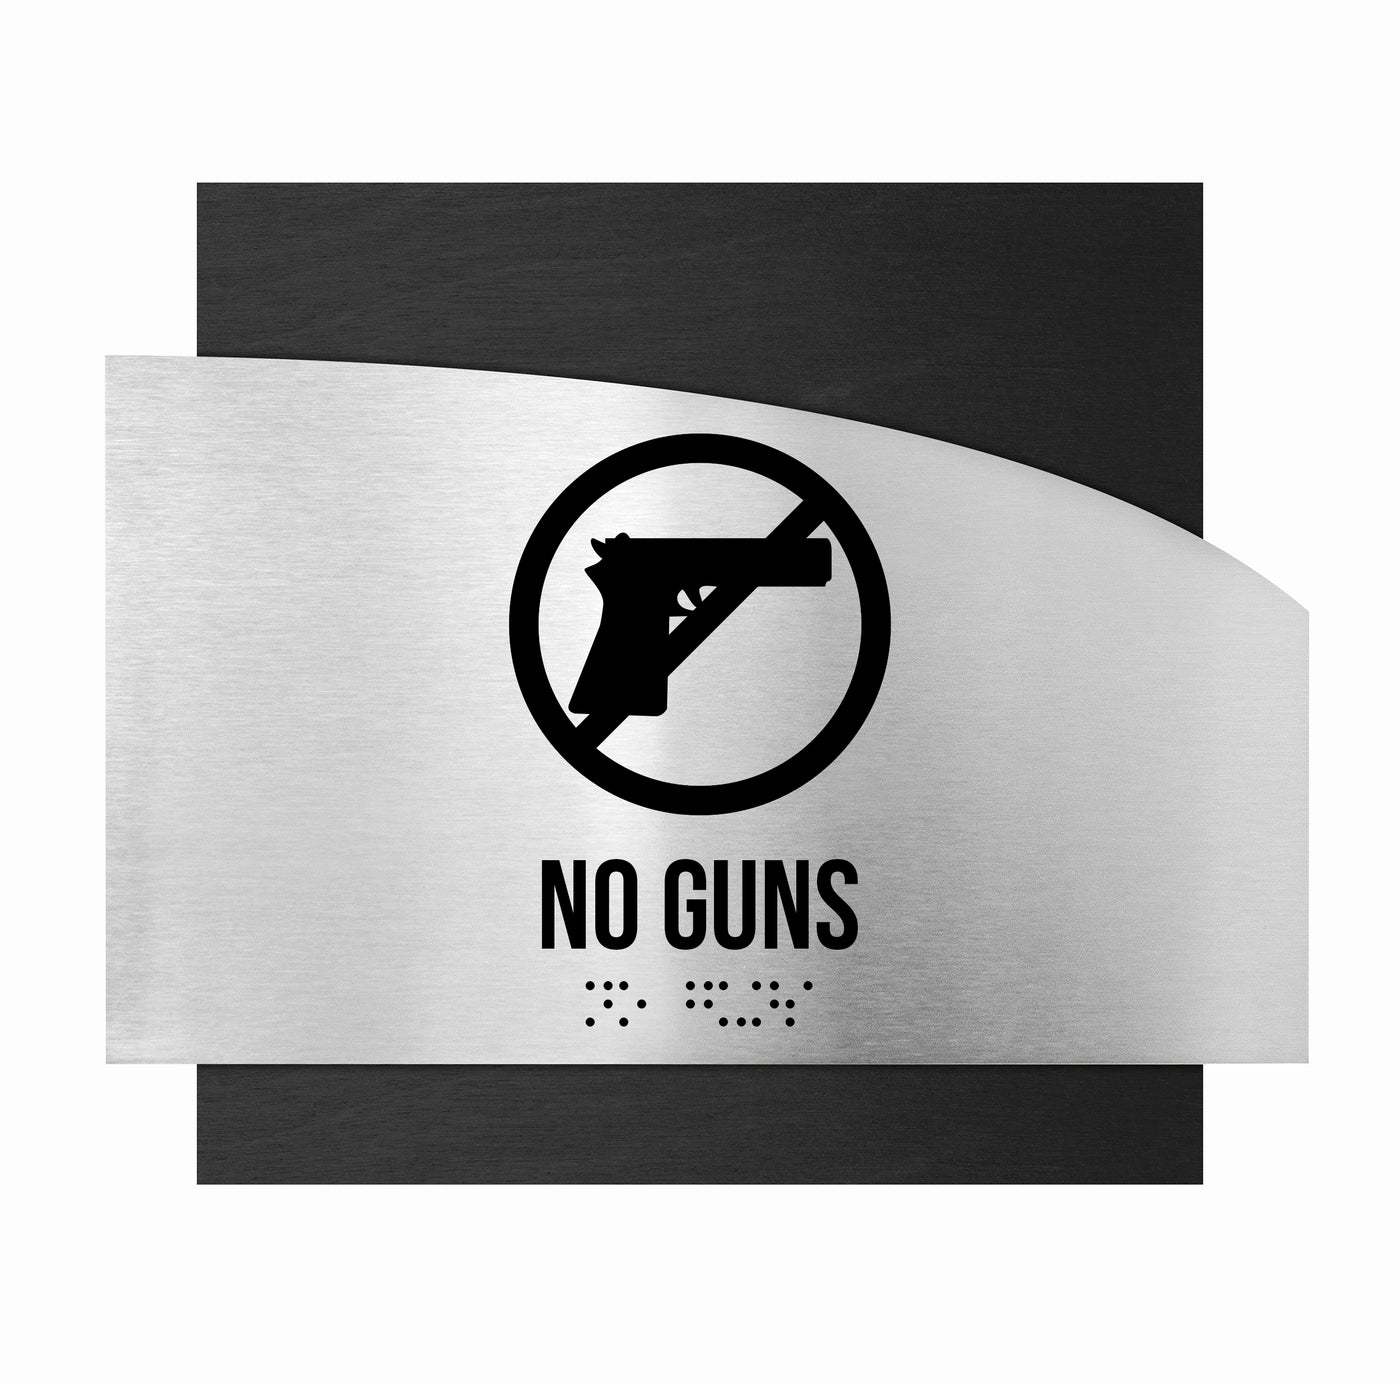 Door Signs - No Guns Sing Wood "Wave" Design